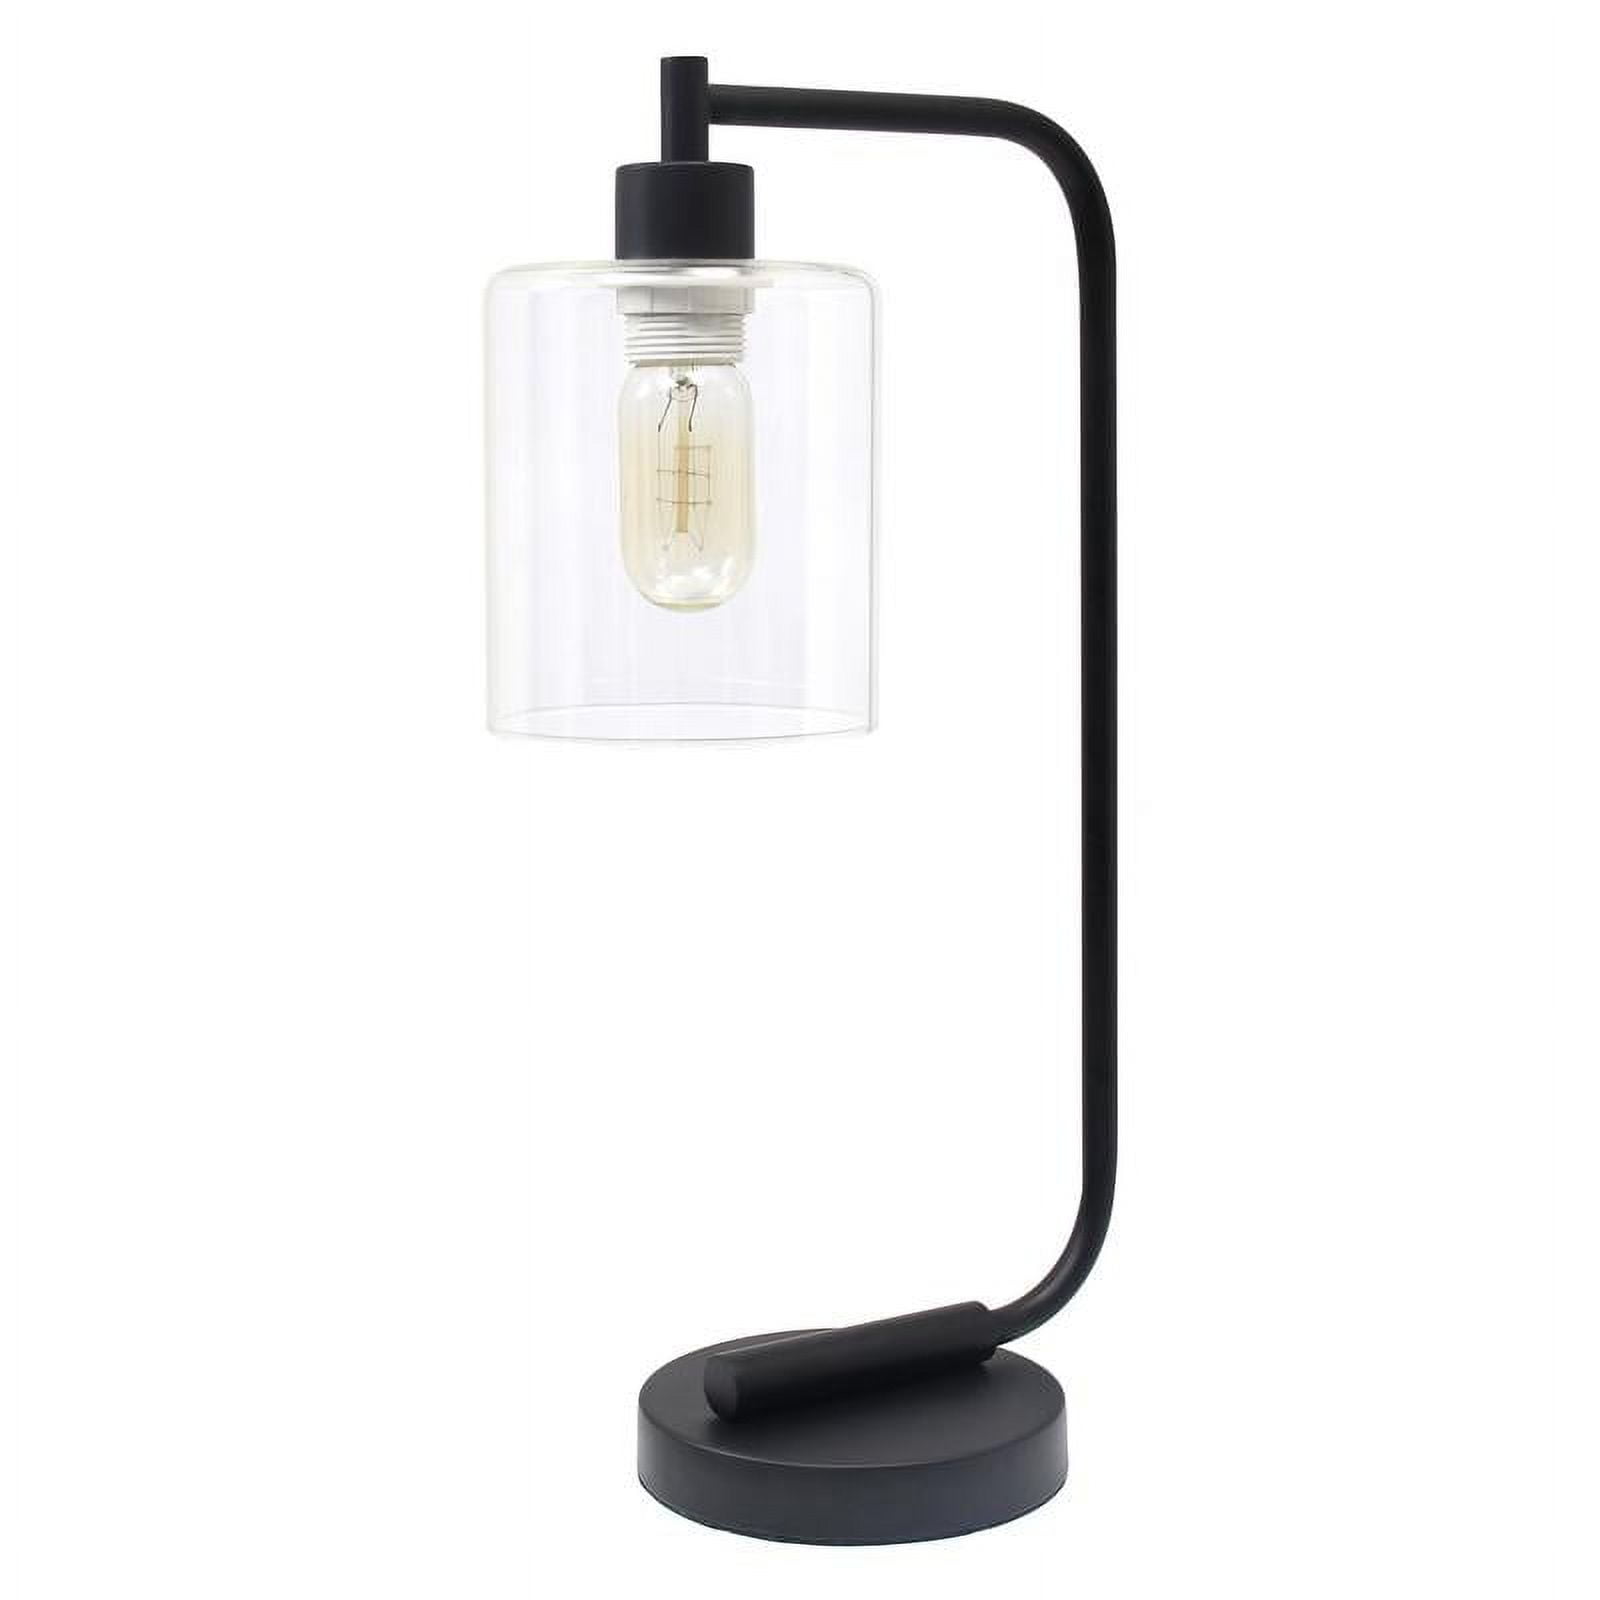 Ld1036-blk Bronson Antique Style Iron Lantern Desk Lamp With Glass Shade, Black